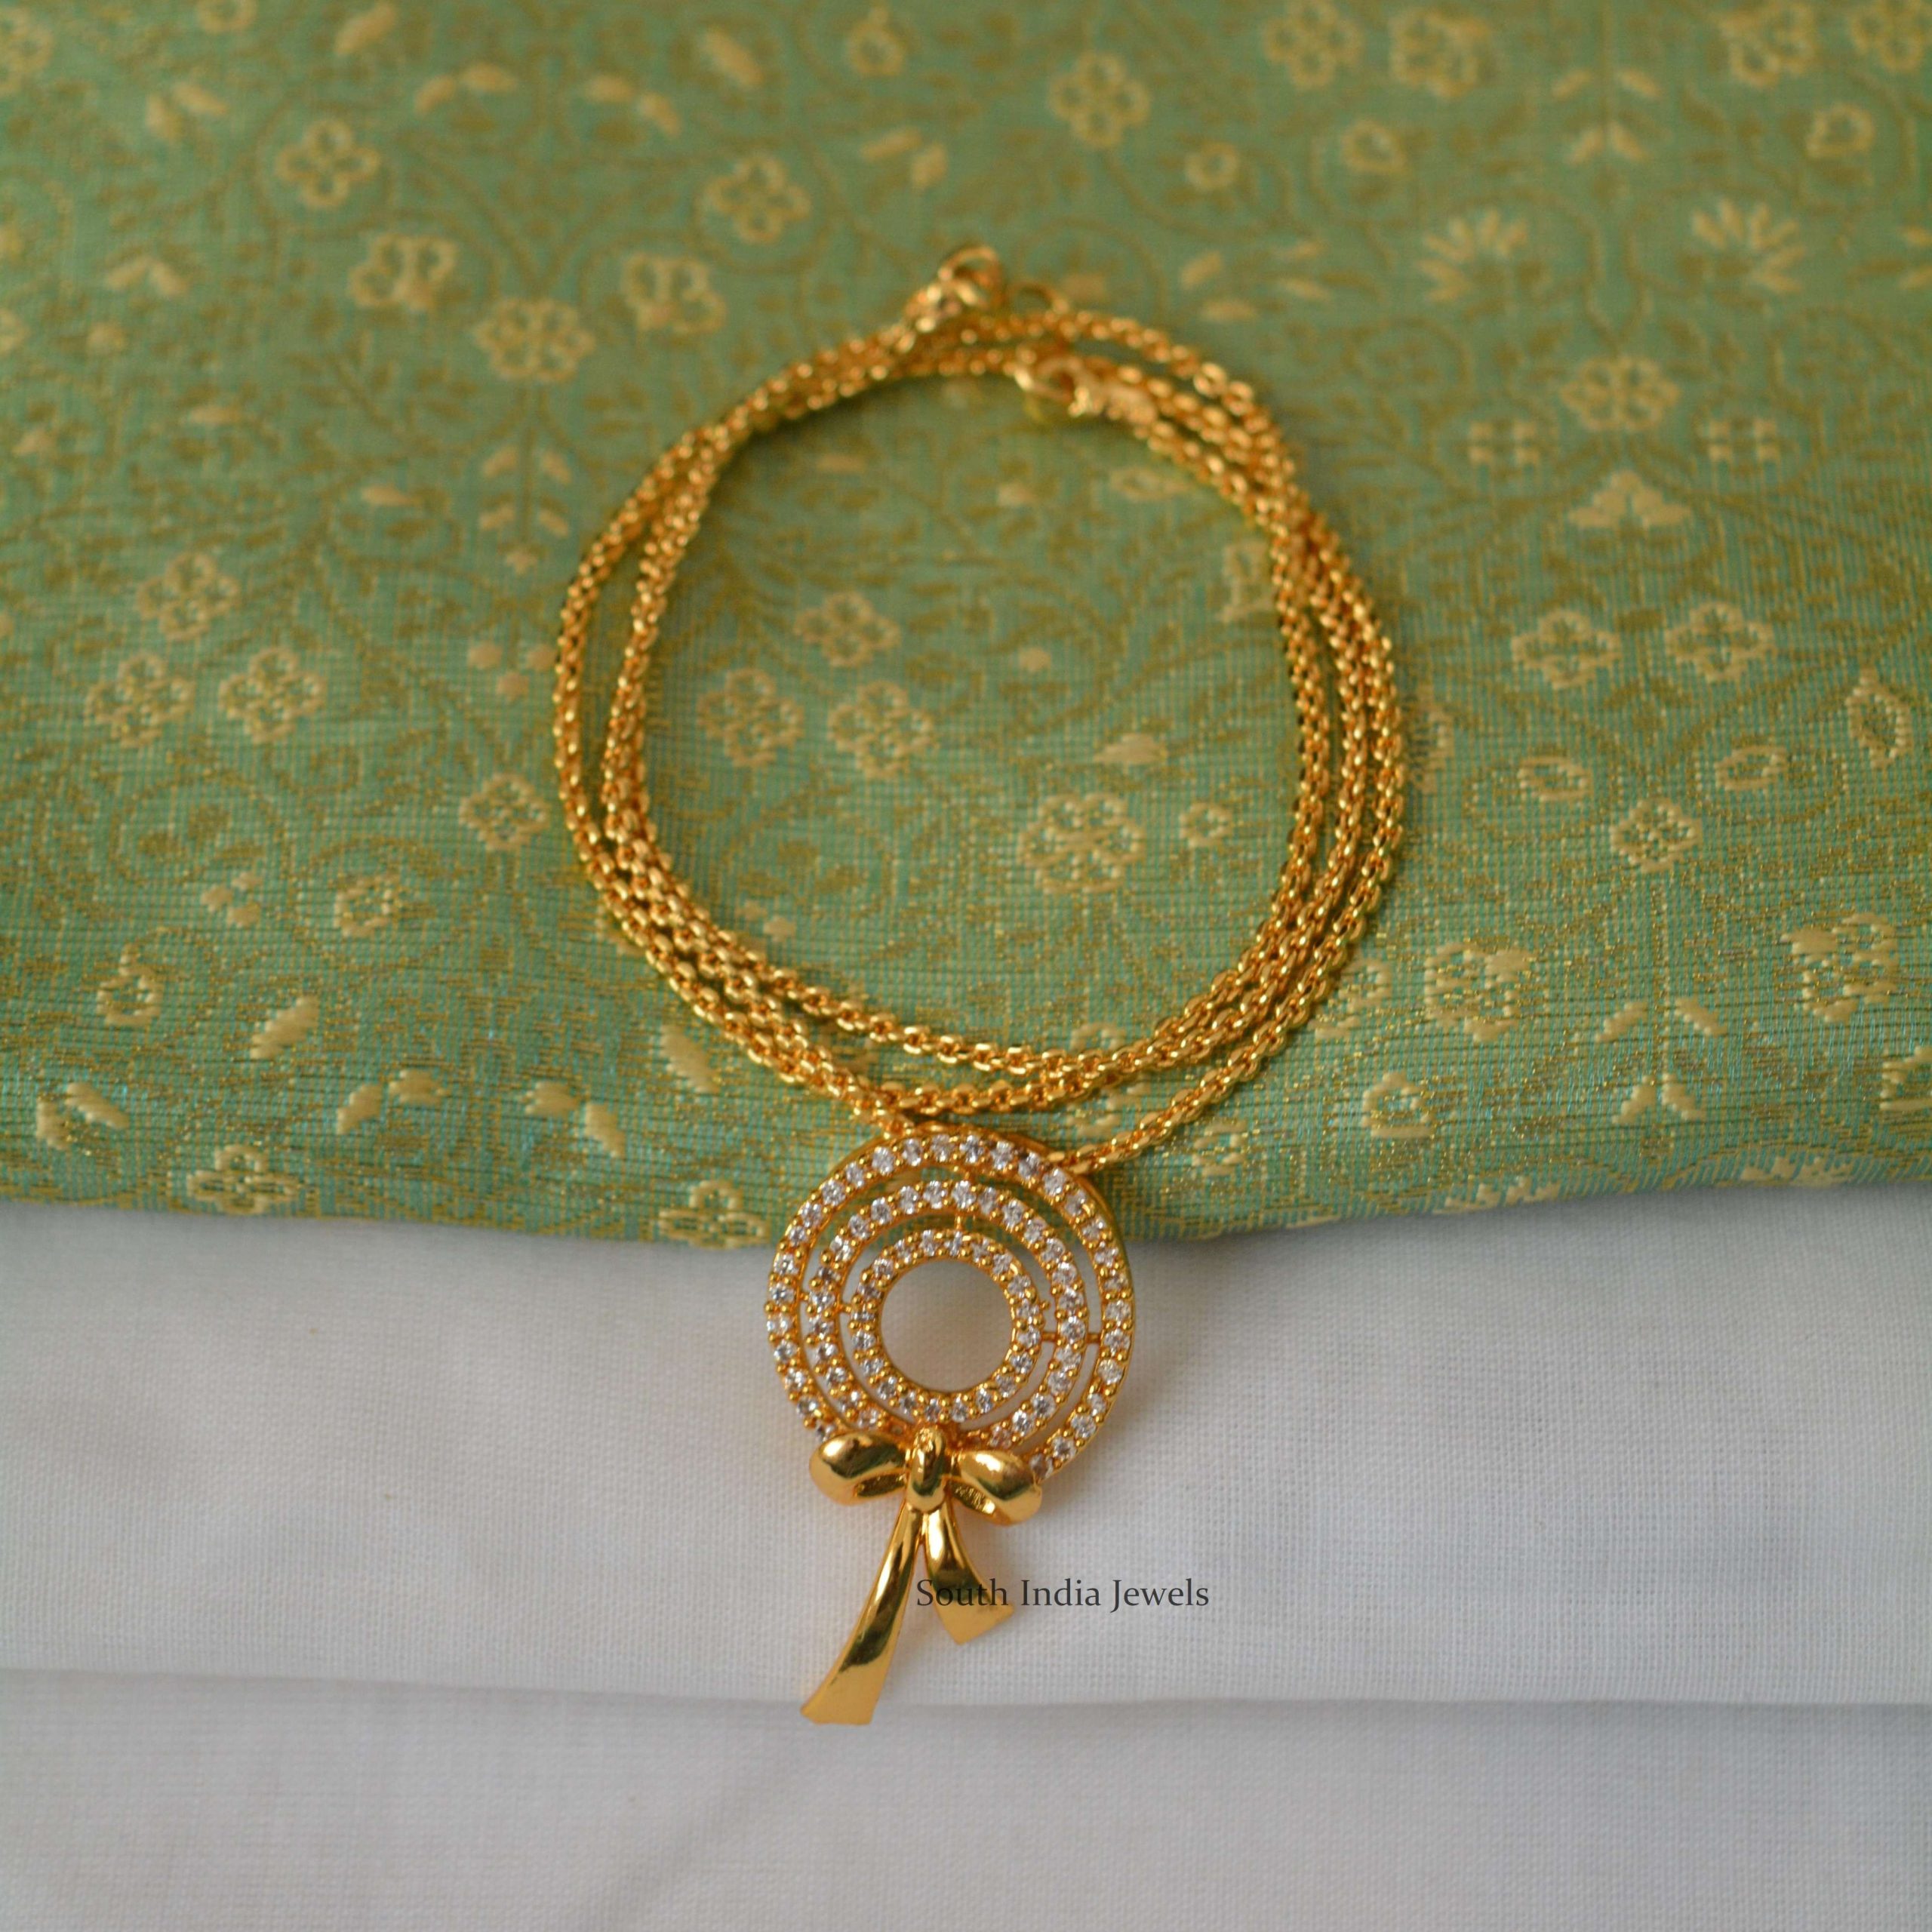 Beautiful Pendant with Gold Polish Short chain..